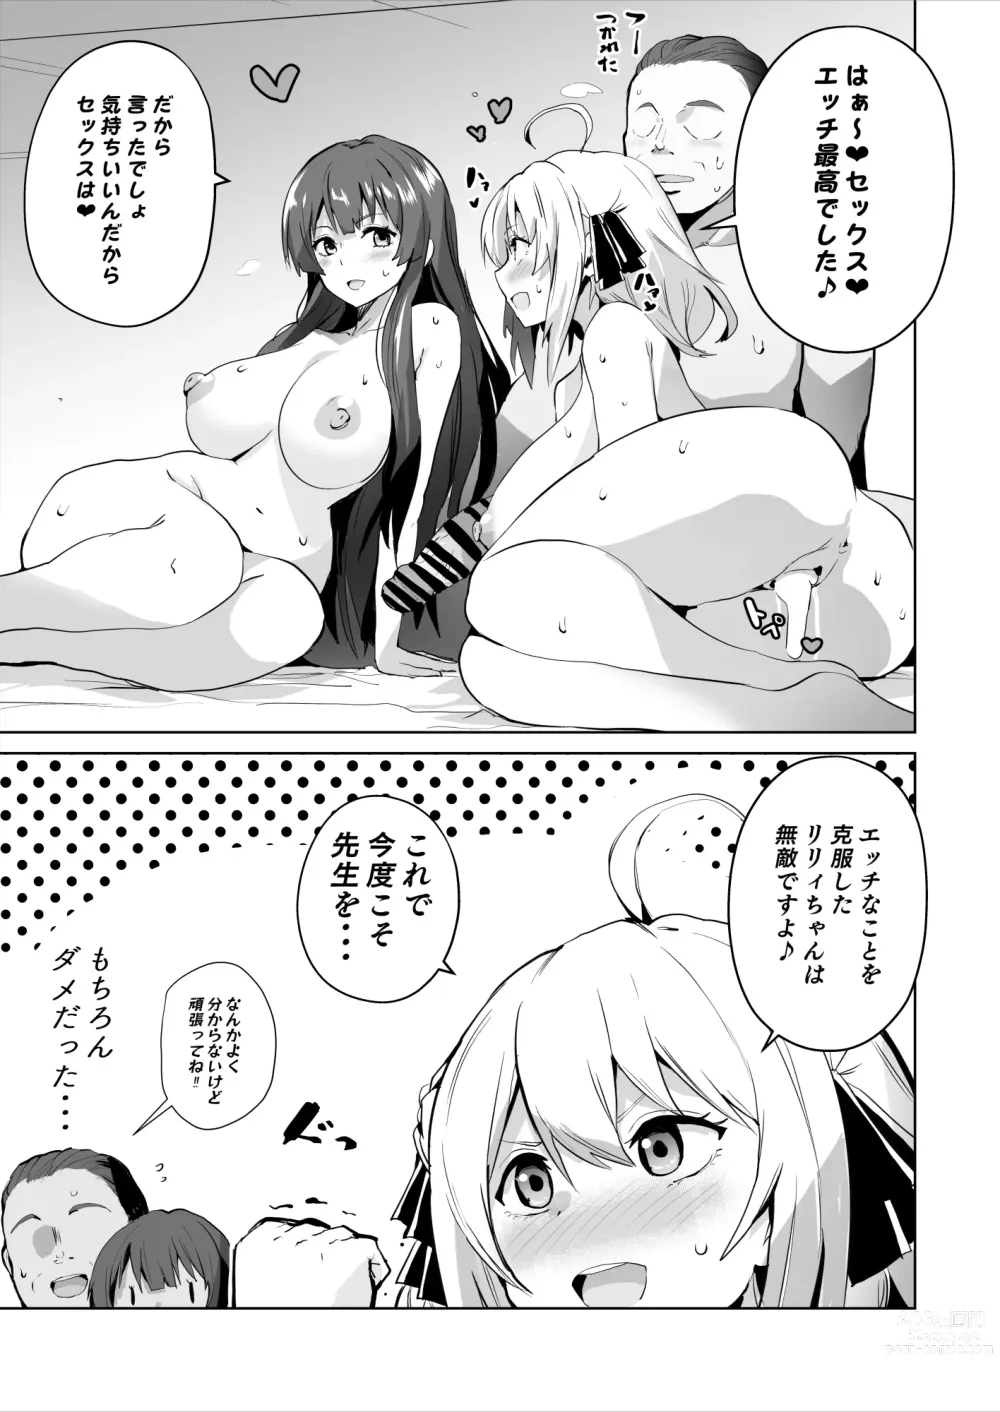 Page 5 of doujinshi Spy Kyoushitsu Ero Manga